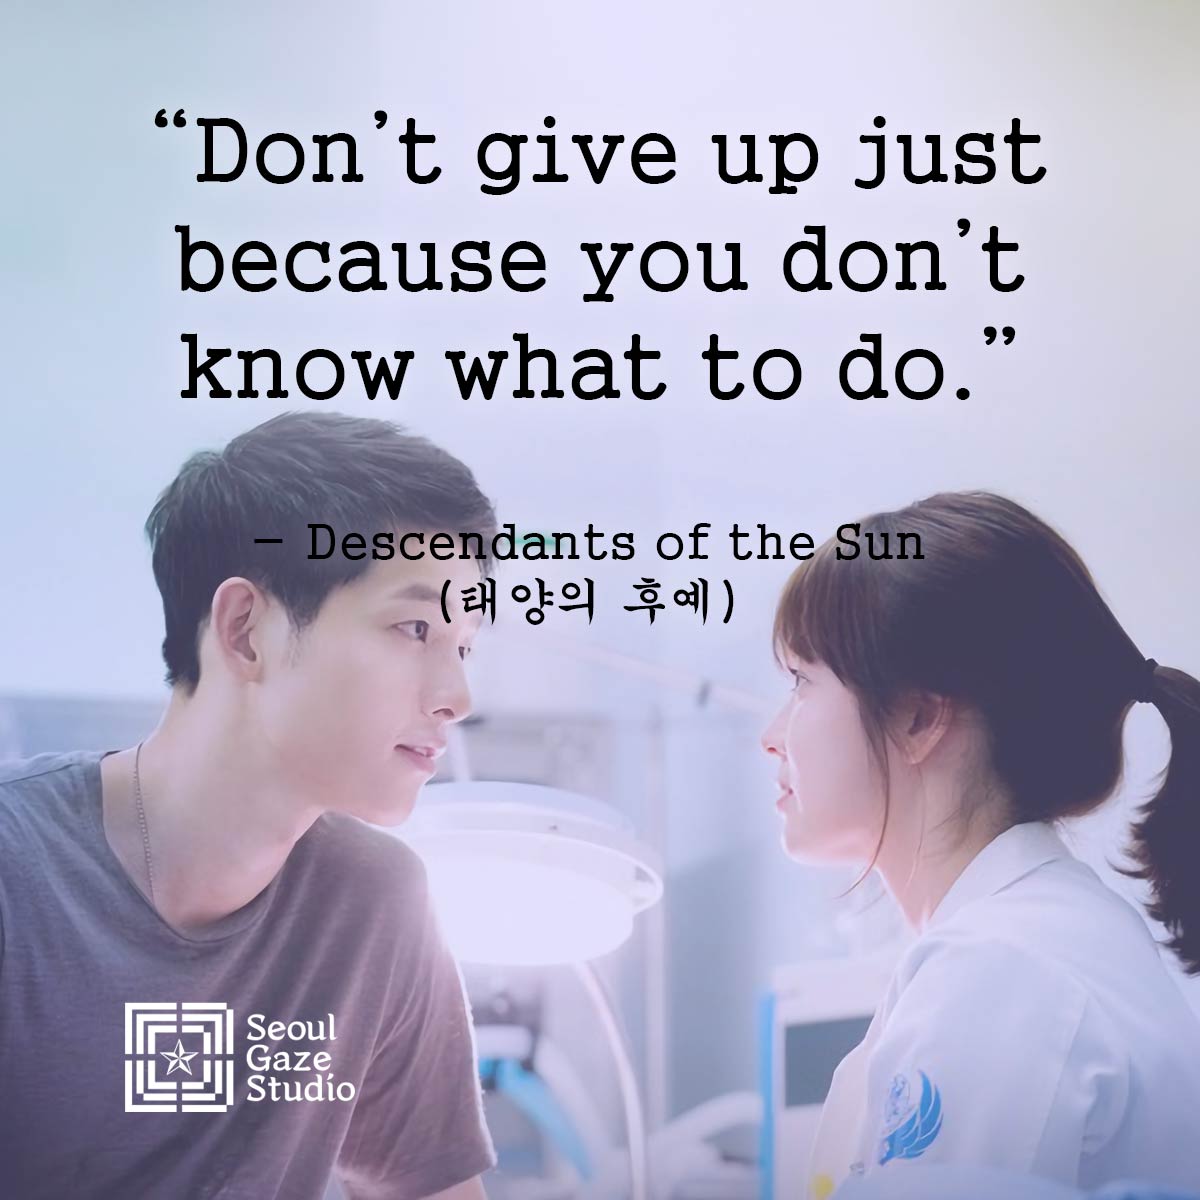 “Don’t give up just because...” - Descendants of the Sun (태양의 후예)

#DescendantsOfTheSun #Kdrama #RomanticDrama #ActionDrama #LoveStory #MilitaryRomance #KoreanSeries #KdramaLovers #AdventureDrama #KoreanEntertainment #SongJoongKi #SongHyeKyo #LoveintheSun #DotS #KoreanDrama